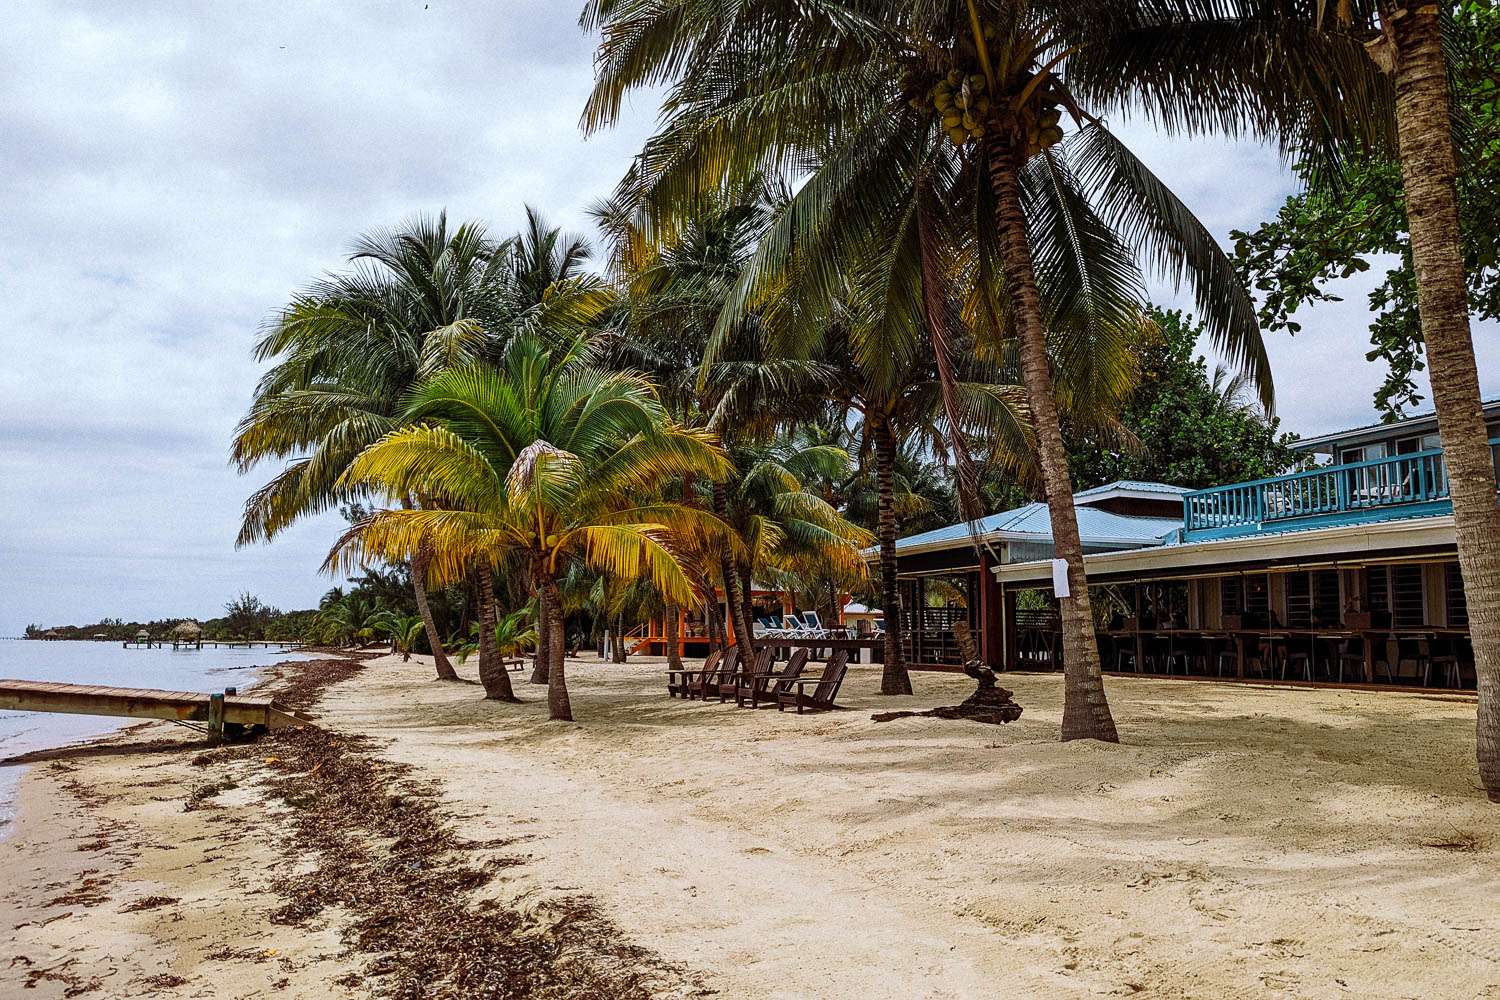 Rachel Off Duty: The Coastline of Placencia, Belize